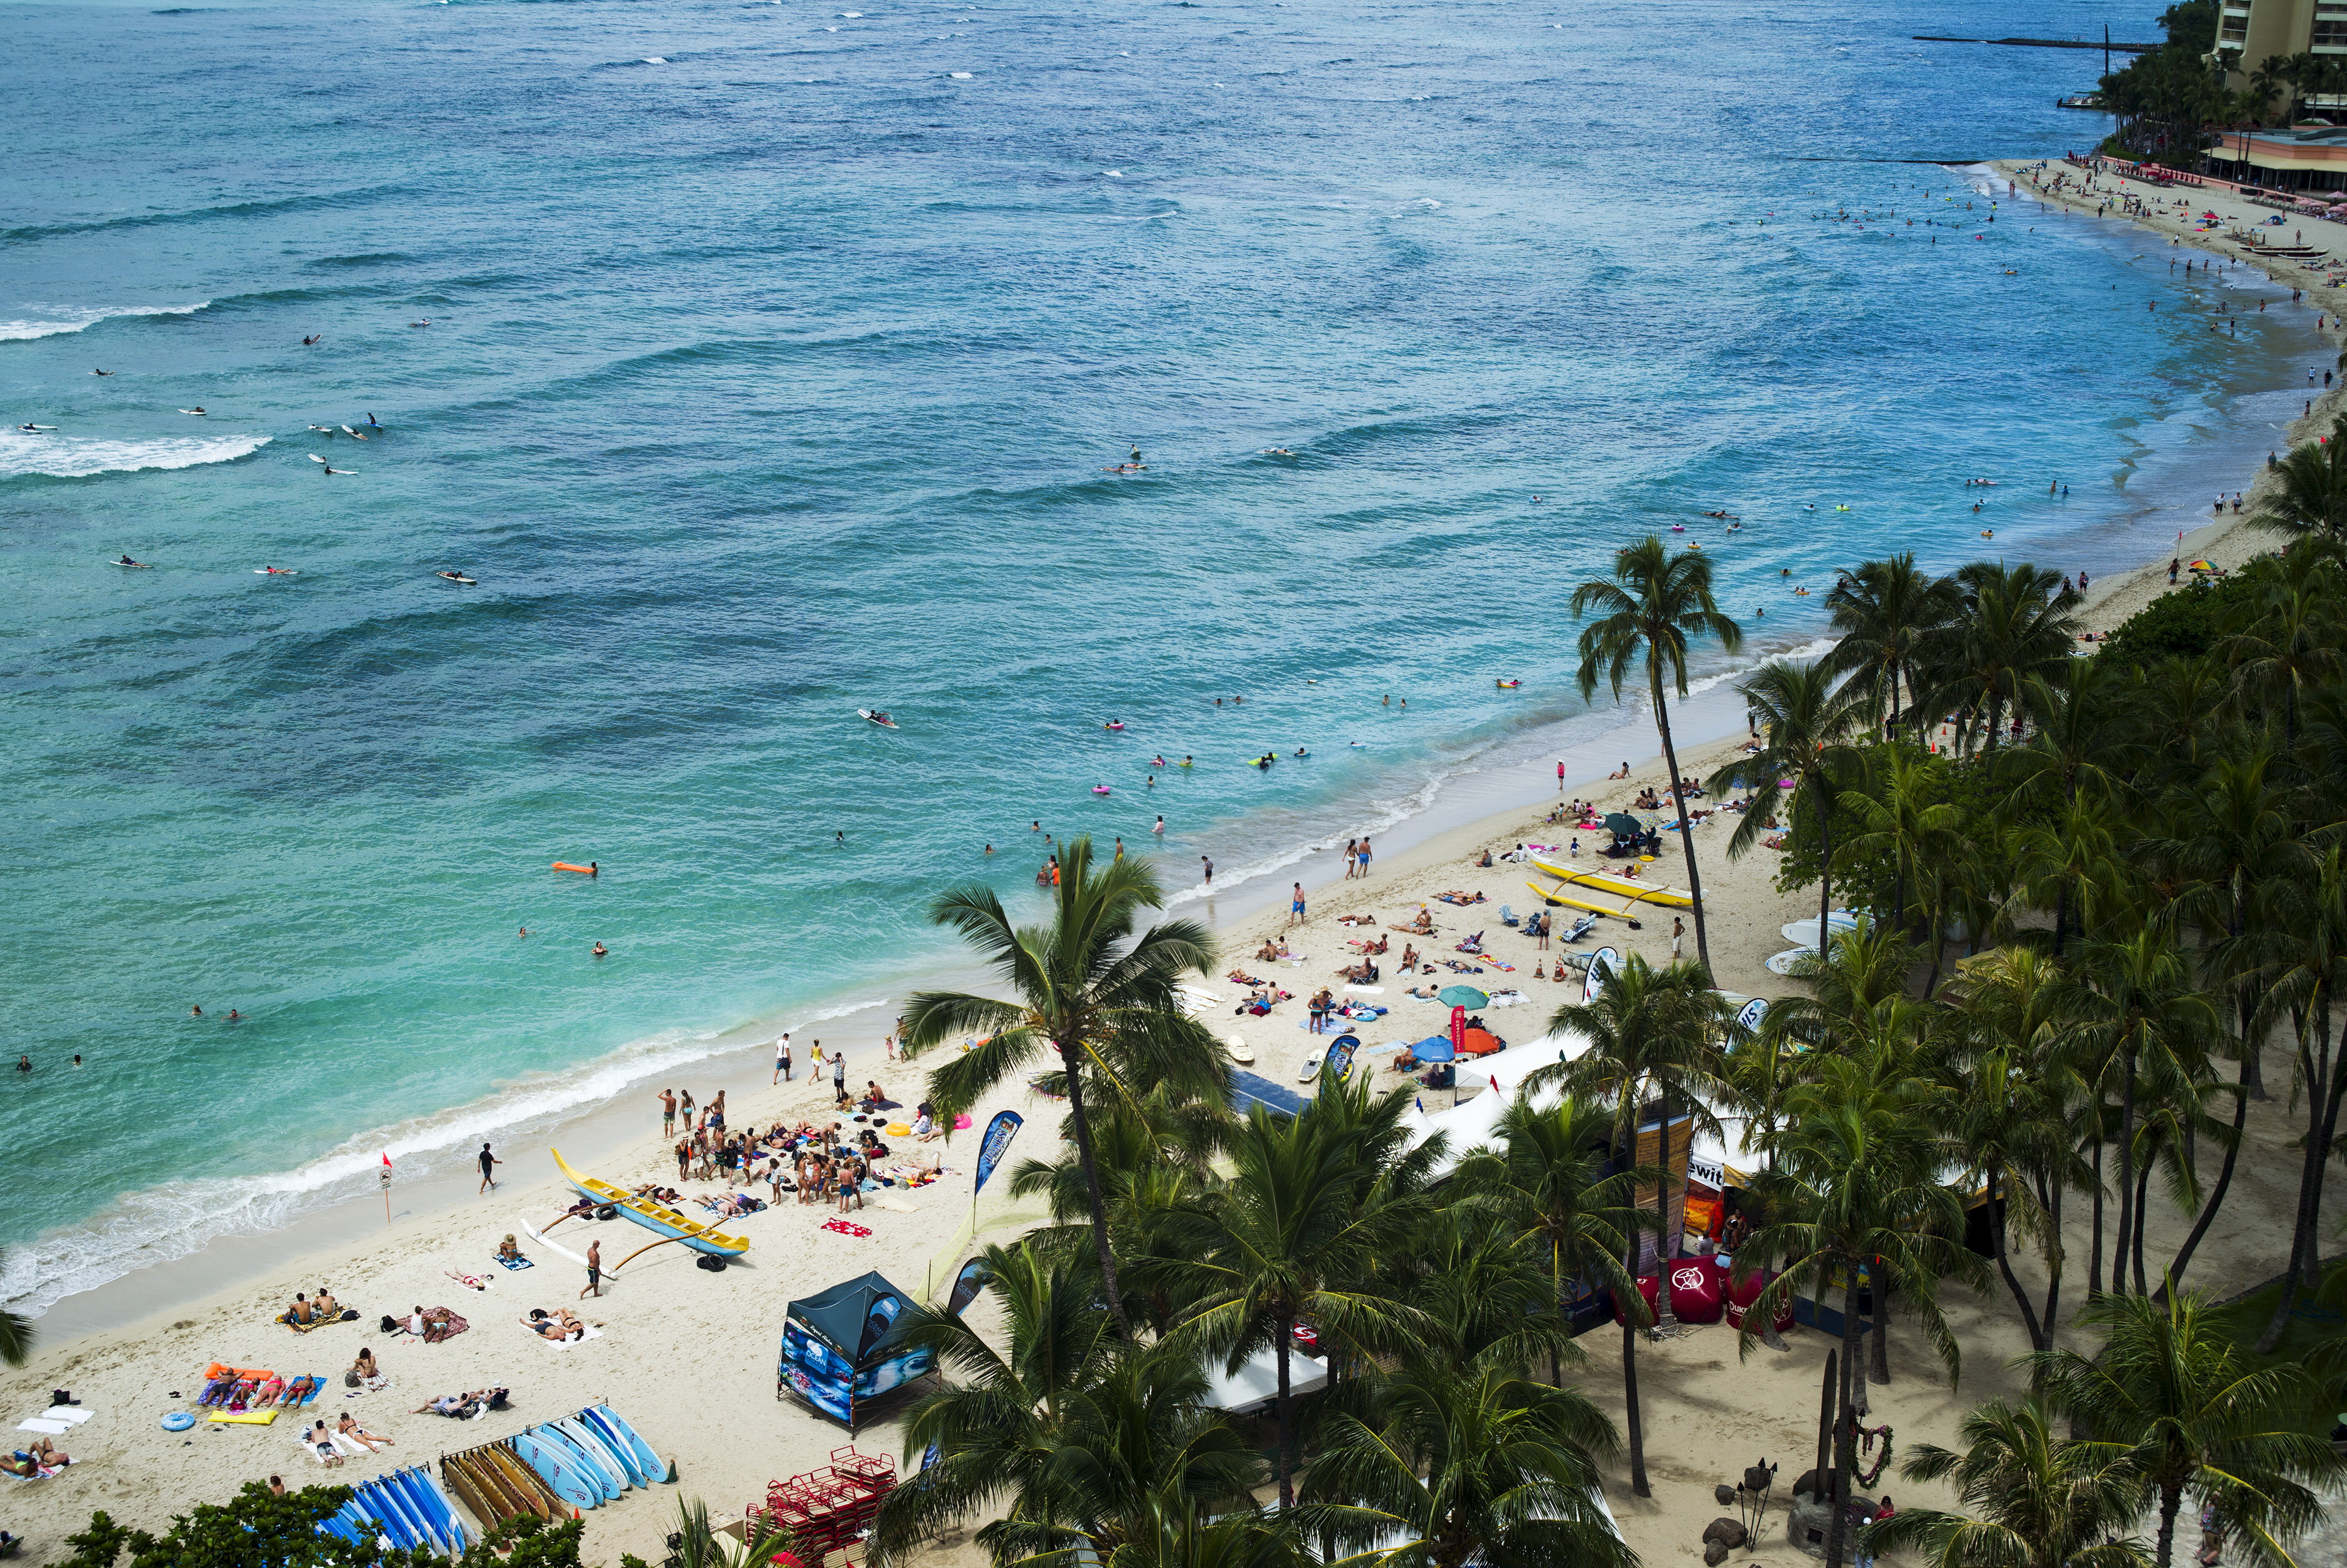 People are pictured at Waikiki Beach in Honolulu, Hawaii